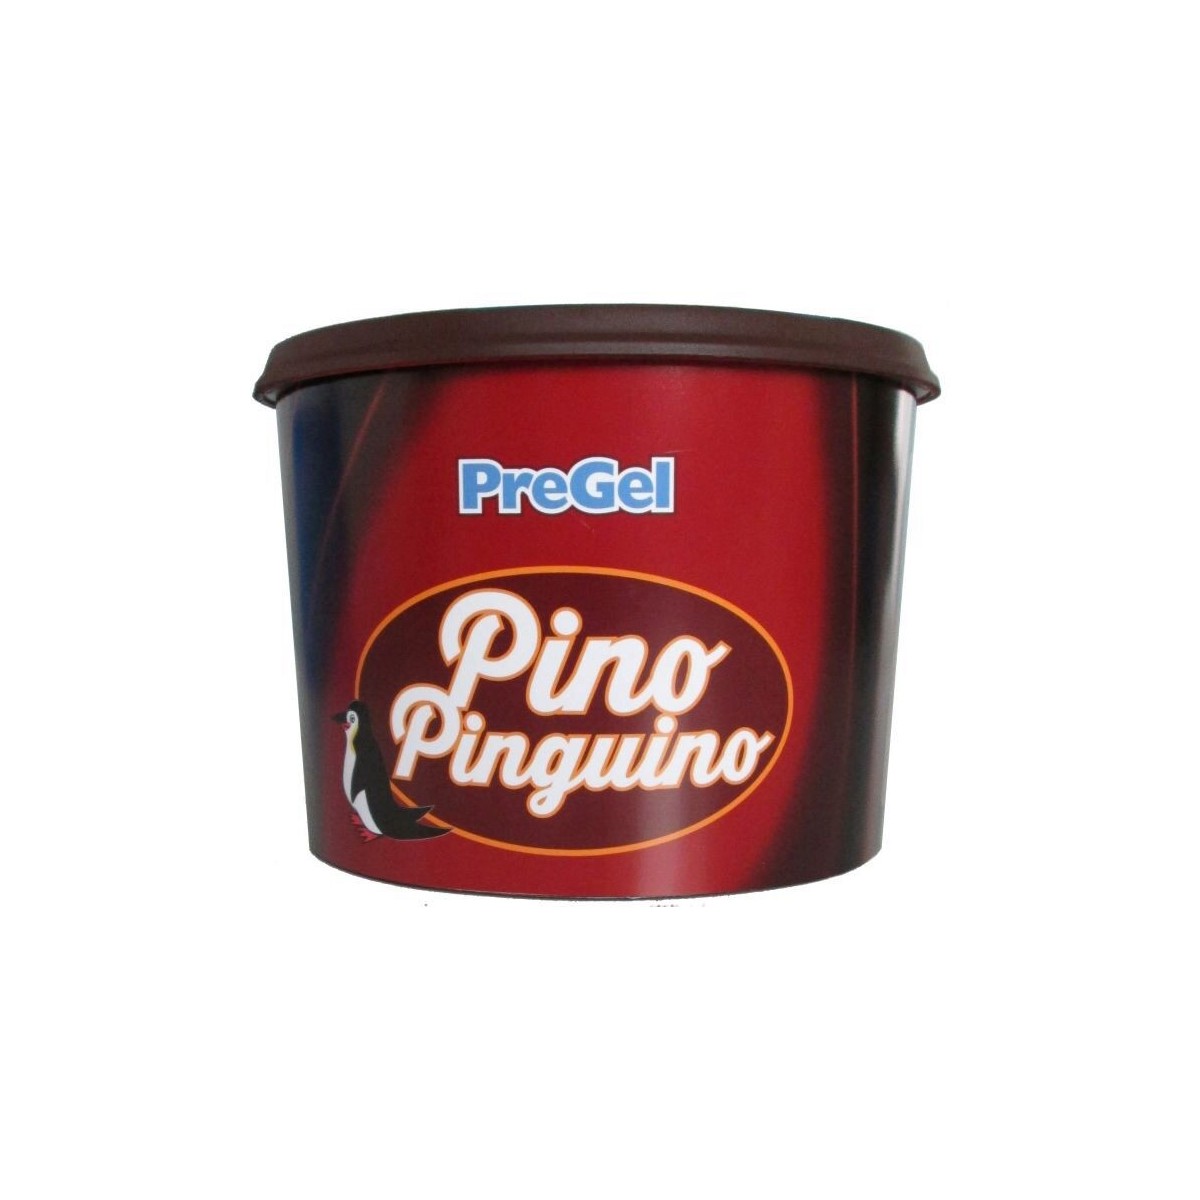 PREGEL PINOPINGUINO CHOCOLATE & HAZELNUT SAUCE 2 X 2,5KG  BOX 